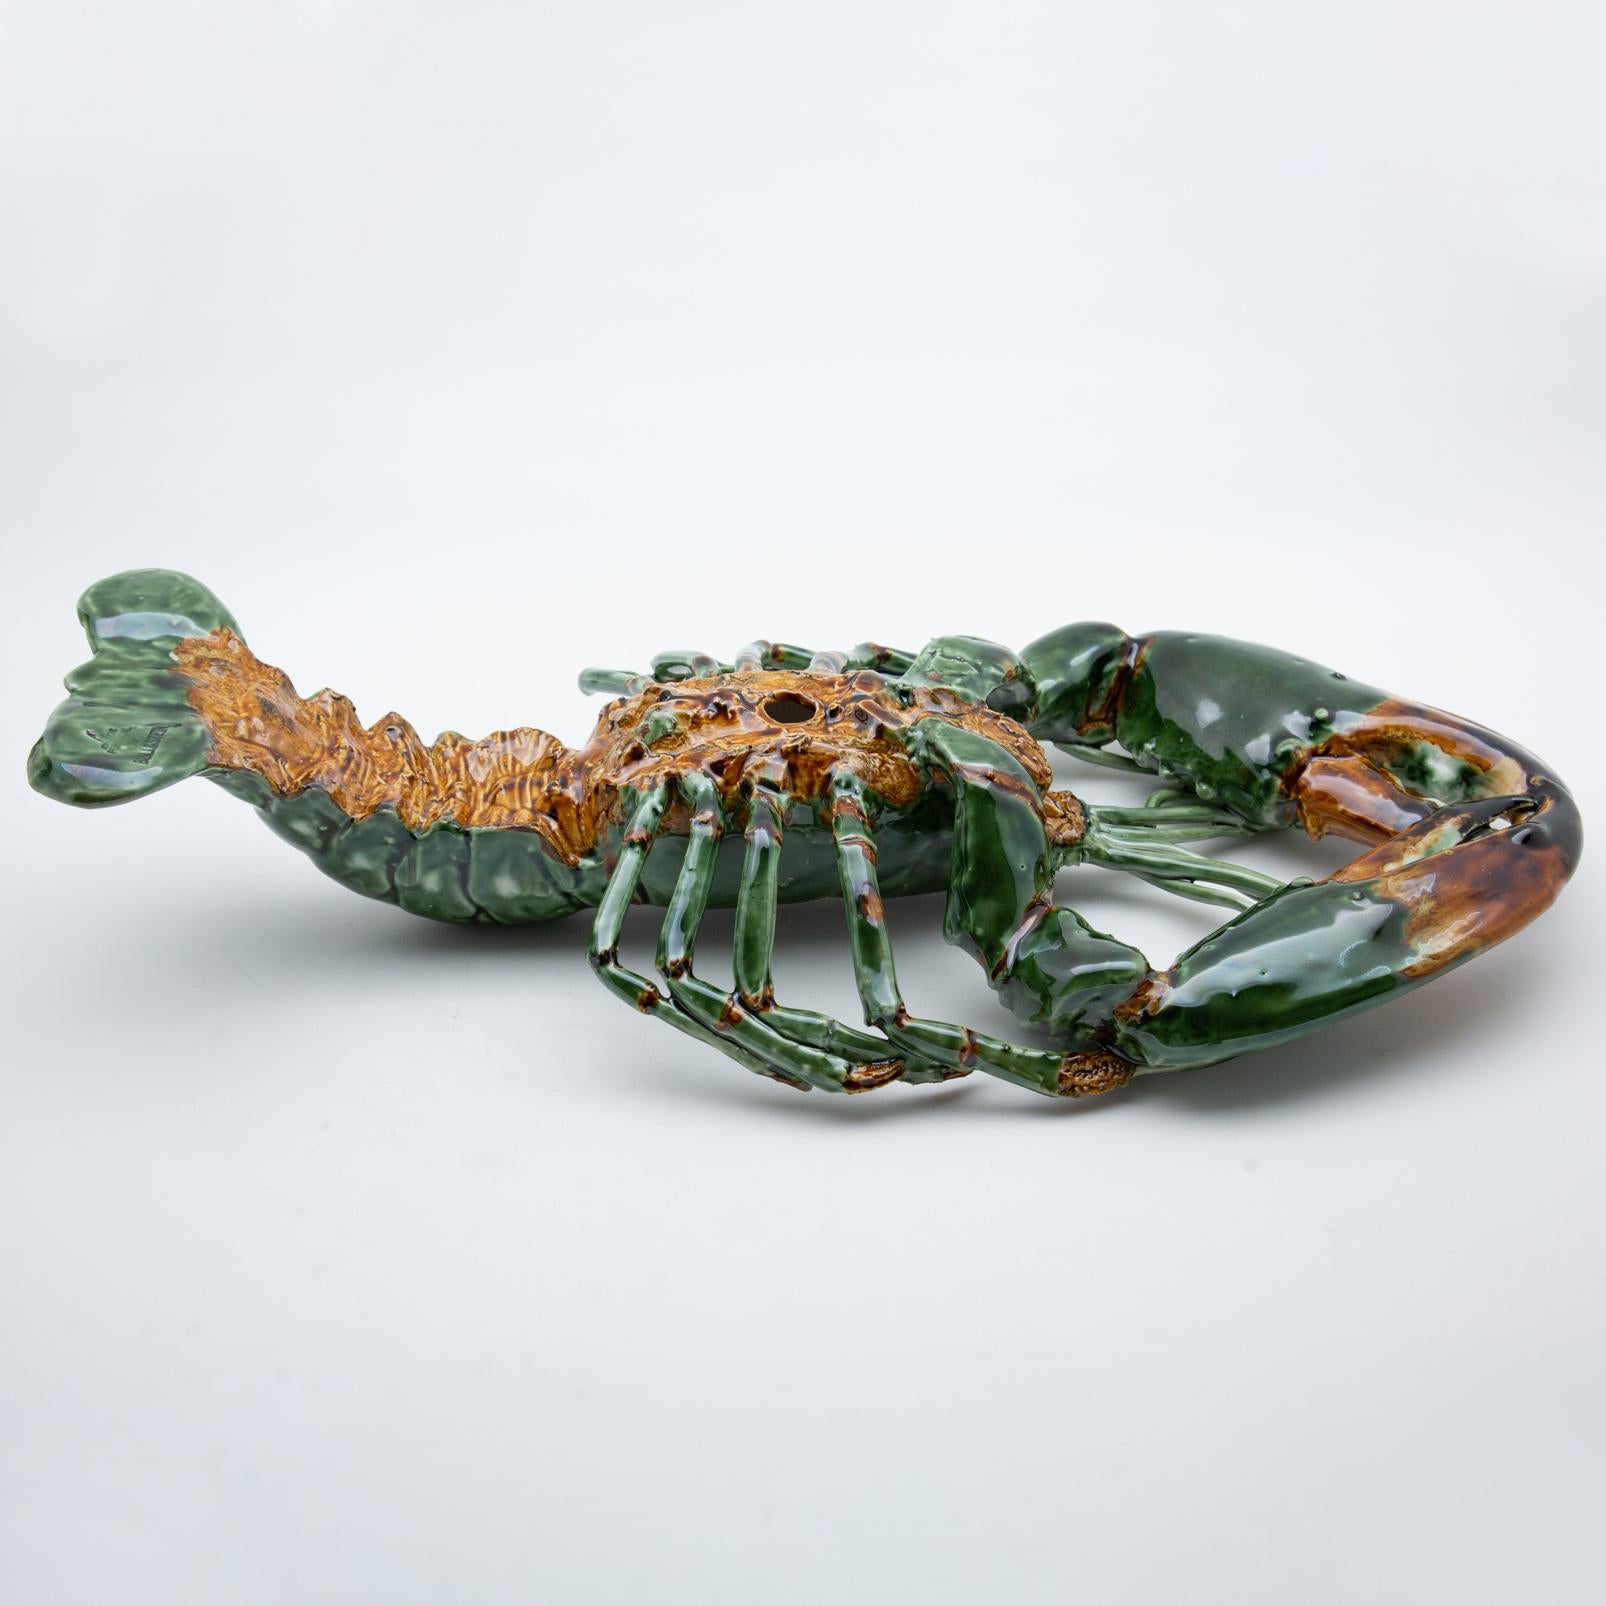 Contemporary Portuguese Handmade Pallissy or Majollica Large Green Ceramic Crab